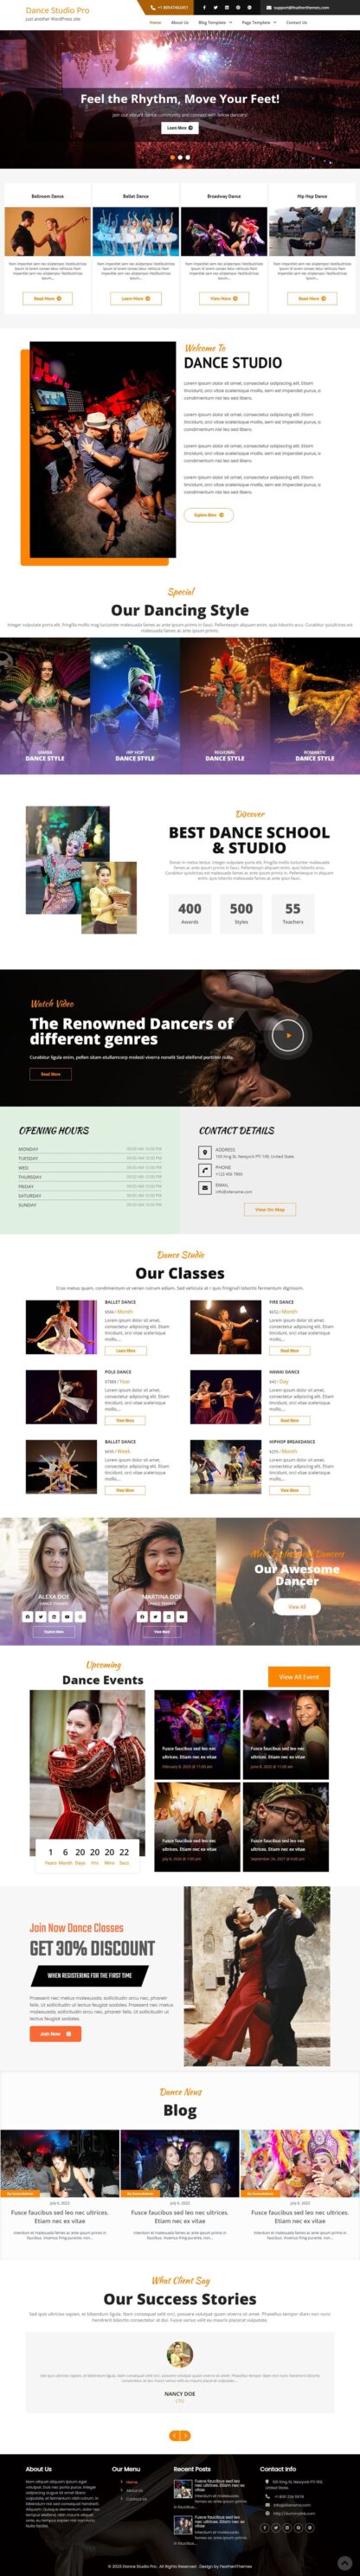 Dance Studio WordPress Theme